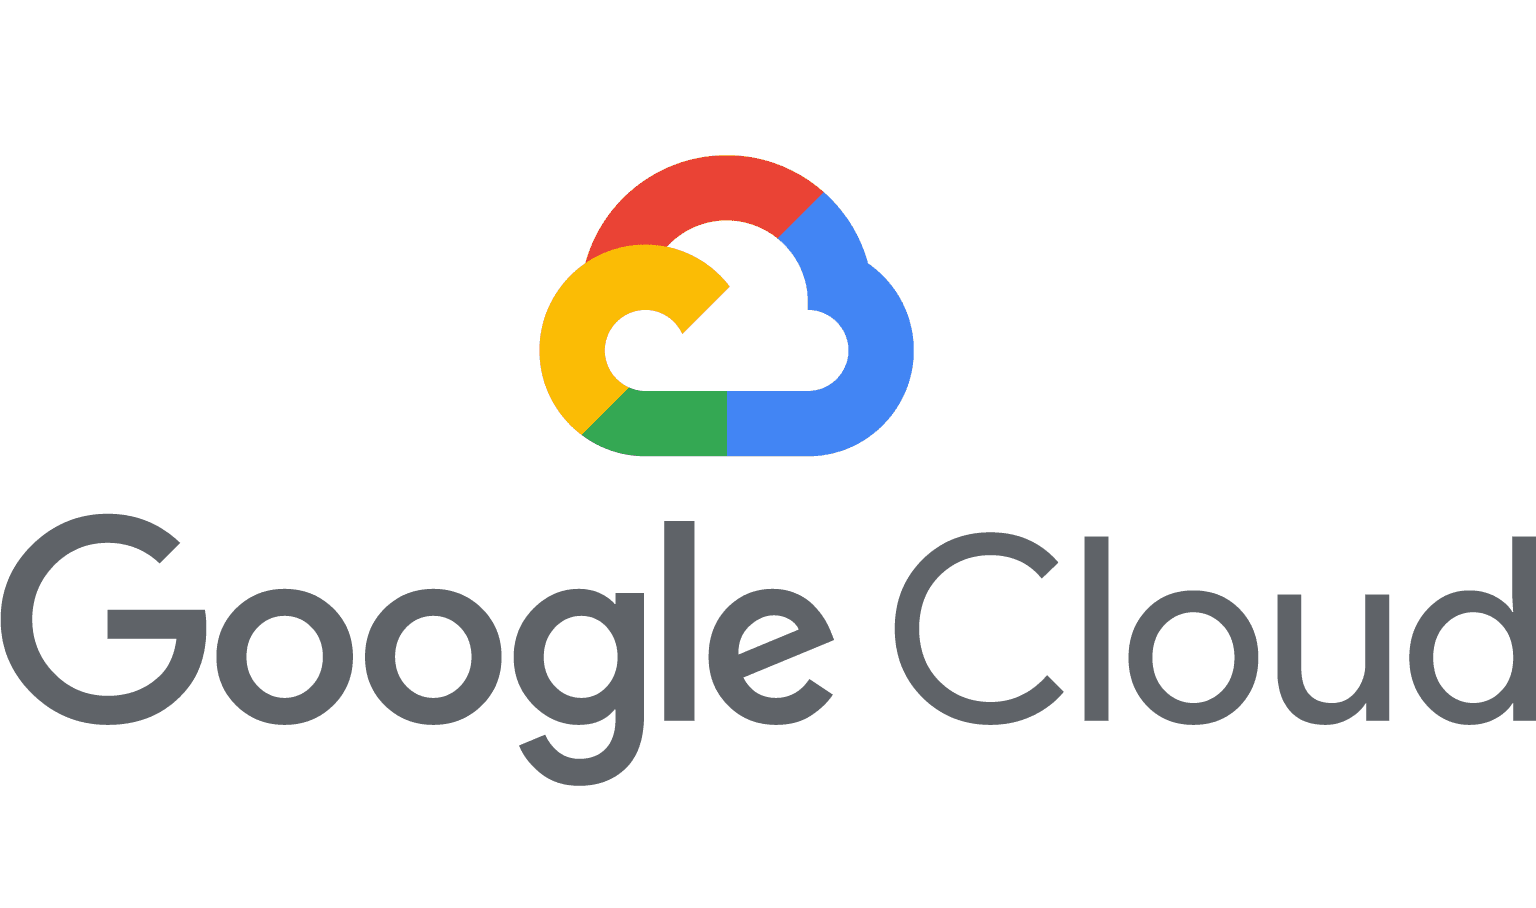 Google Cloud partner in Gurgaon